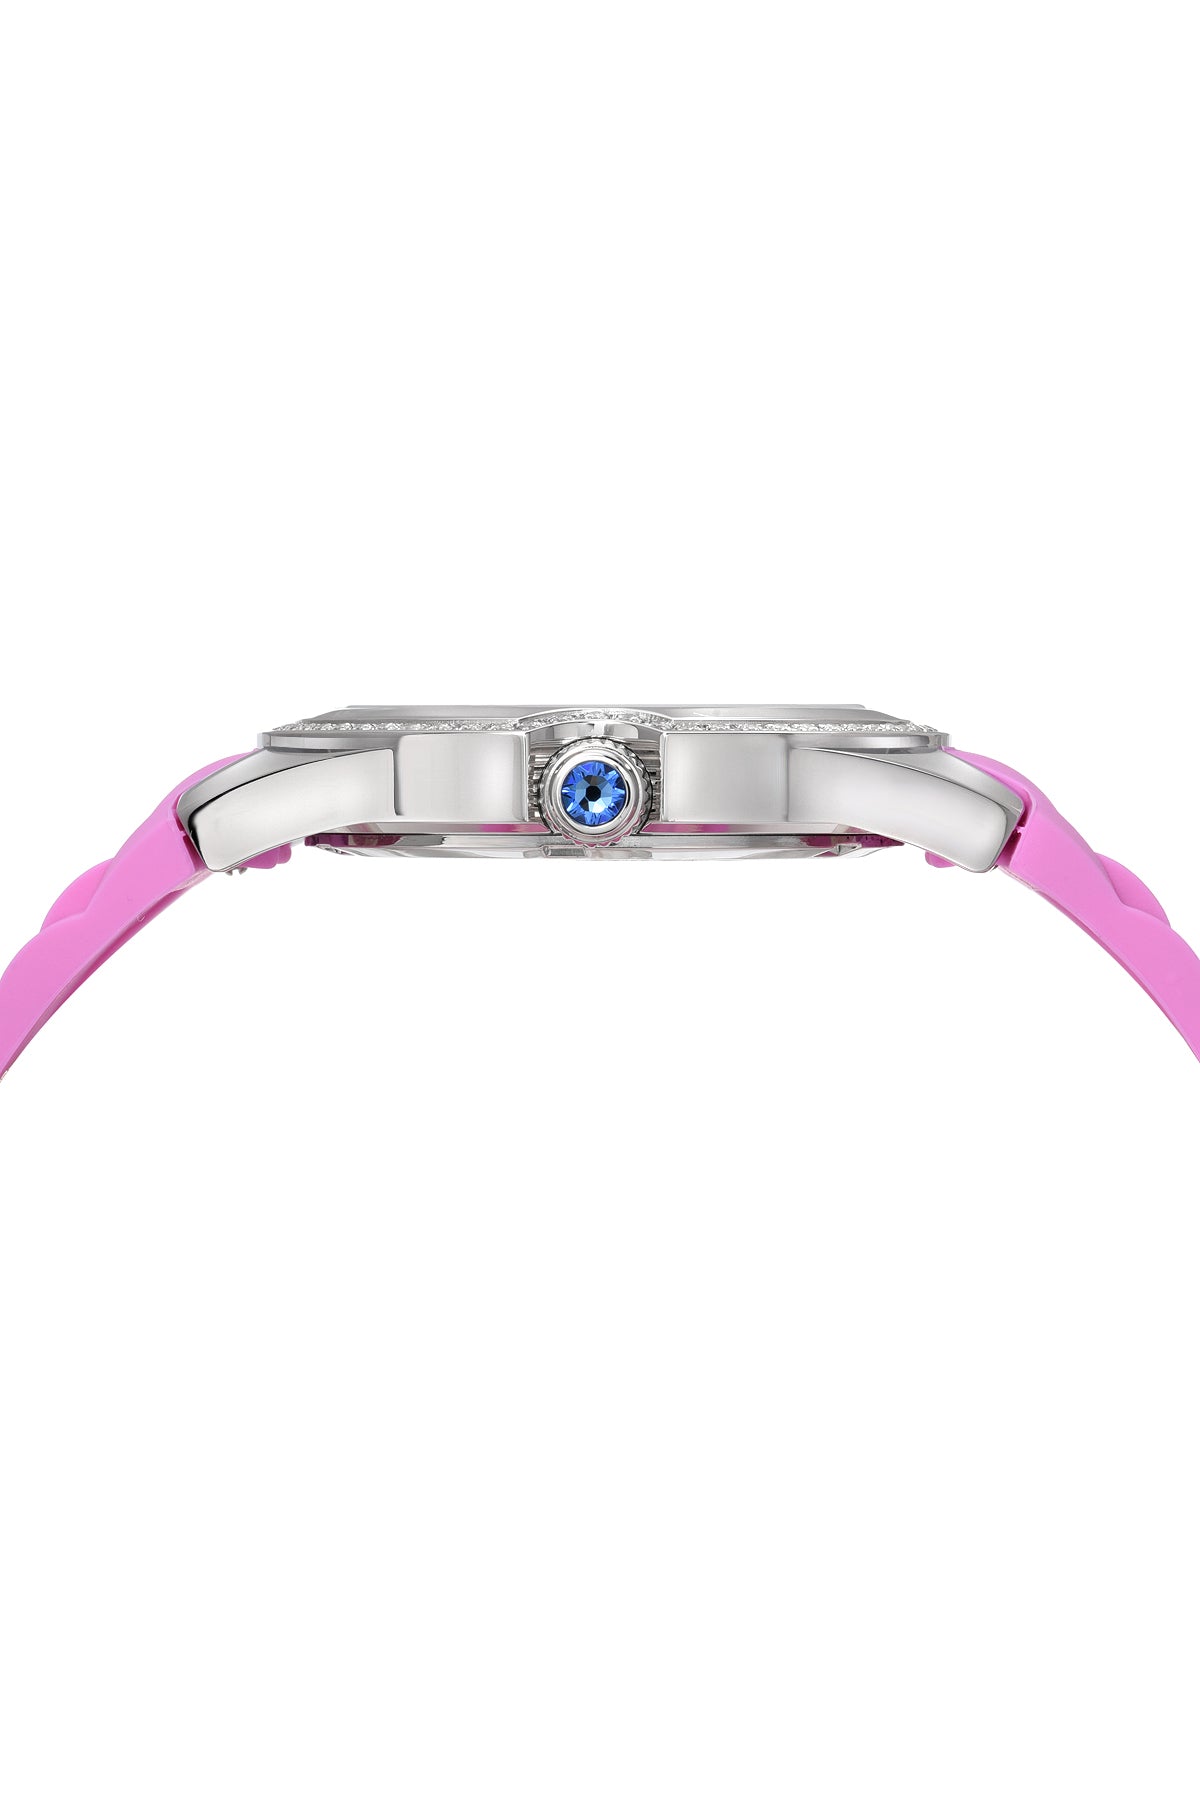 Porsamo Bleu Guilia Luxury Women's Silicone Strap Watch, Interchangeable Bands, Silver, White, Purple 1122BGUR